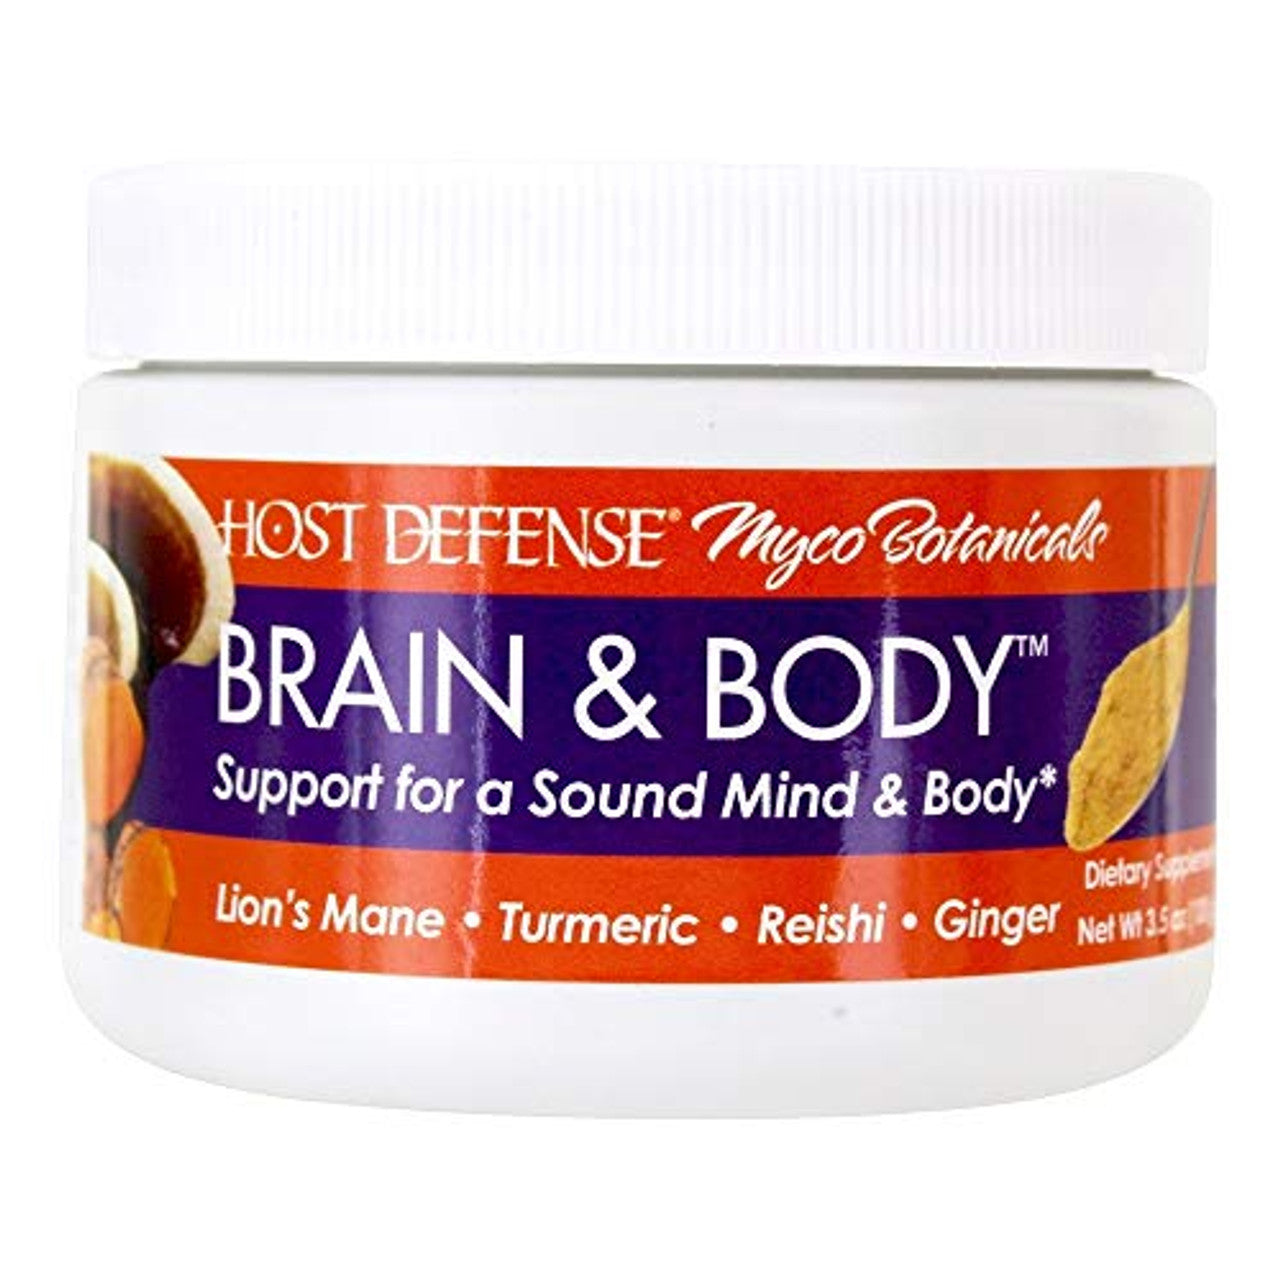 Host Defense, MycoBotanicals Brain & Body Mushroom Powder, Support For Brain, Heart And Digestive Health, Certified Organic Supplement, 3.5 Oz (33 Servings)